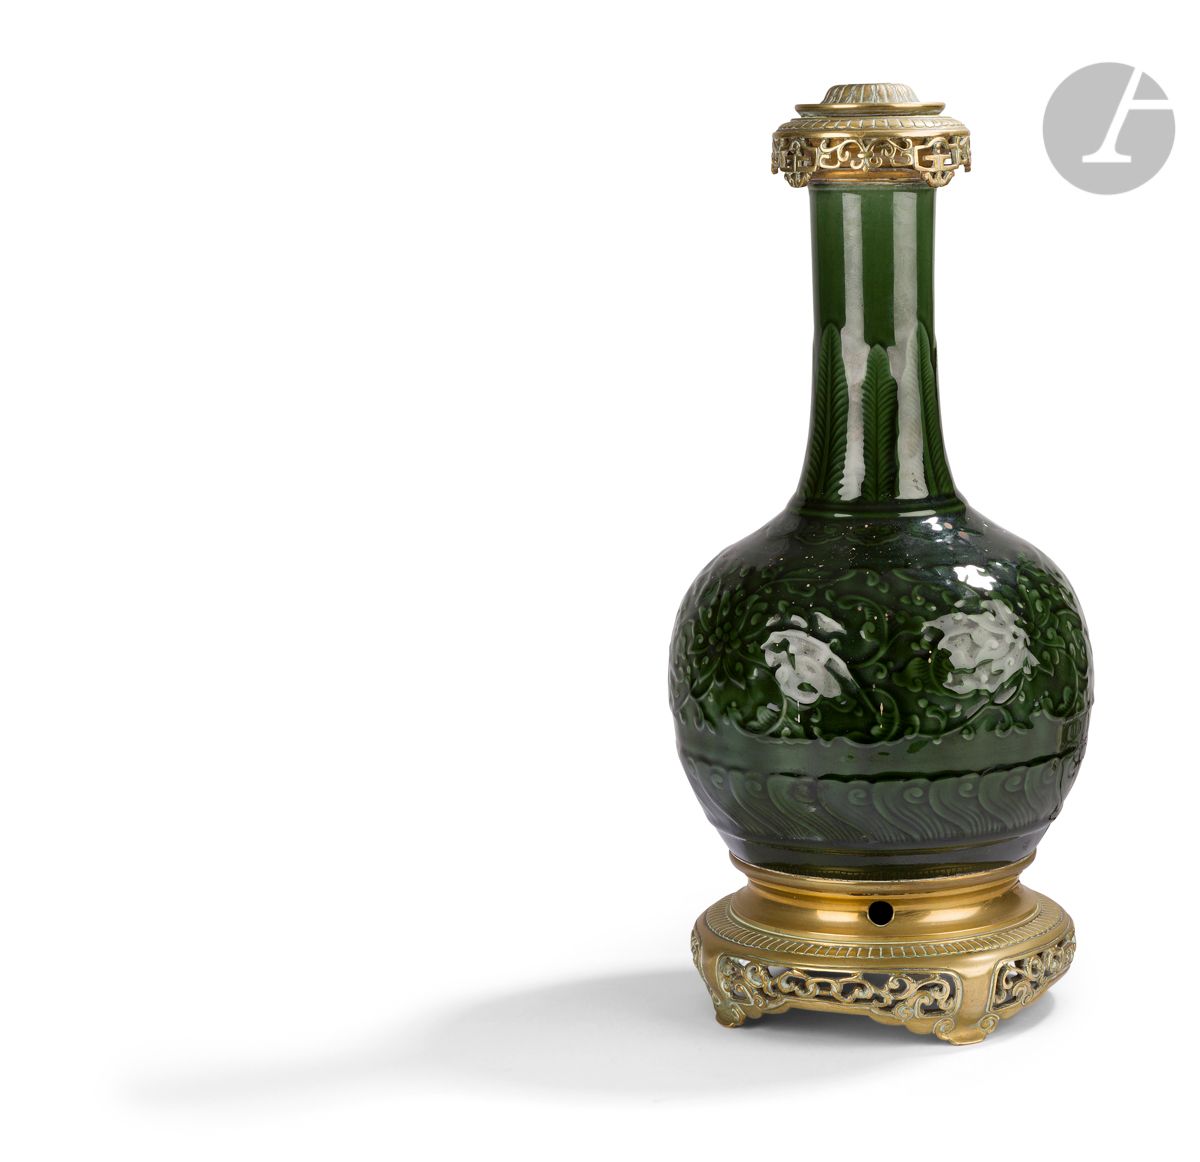 Null Théodore Deck (attribué à)
Vase en faïence de forme balustre à col cylindri&hellip;